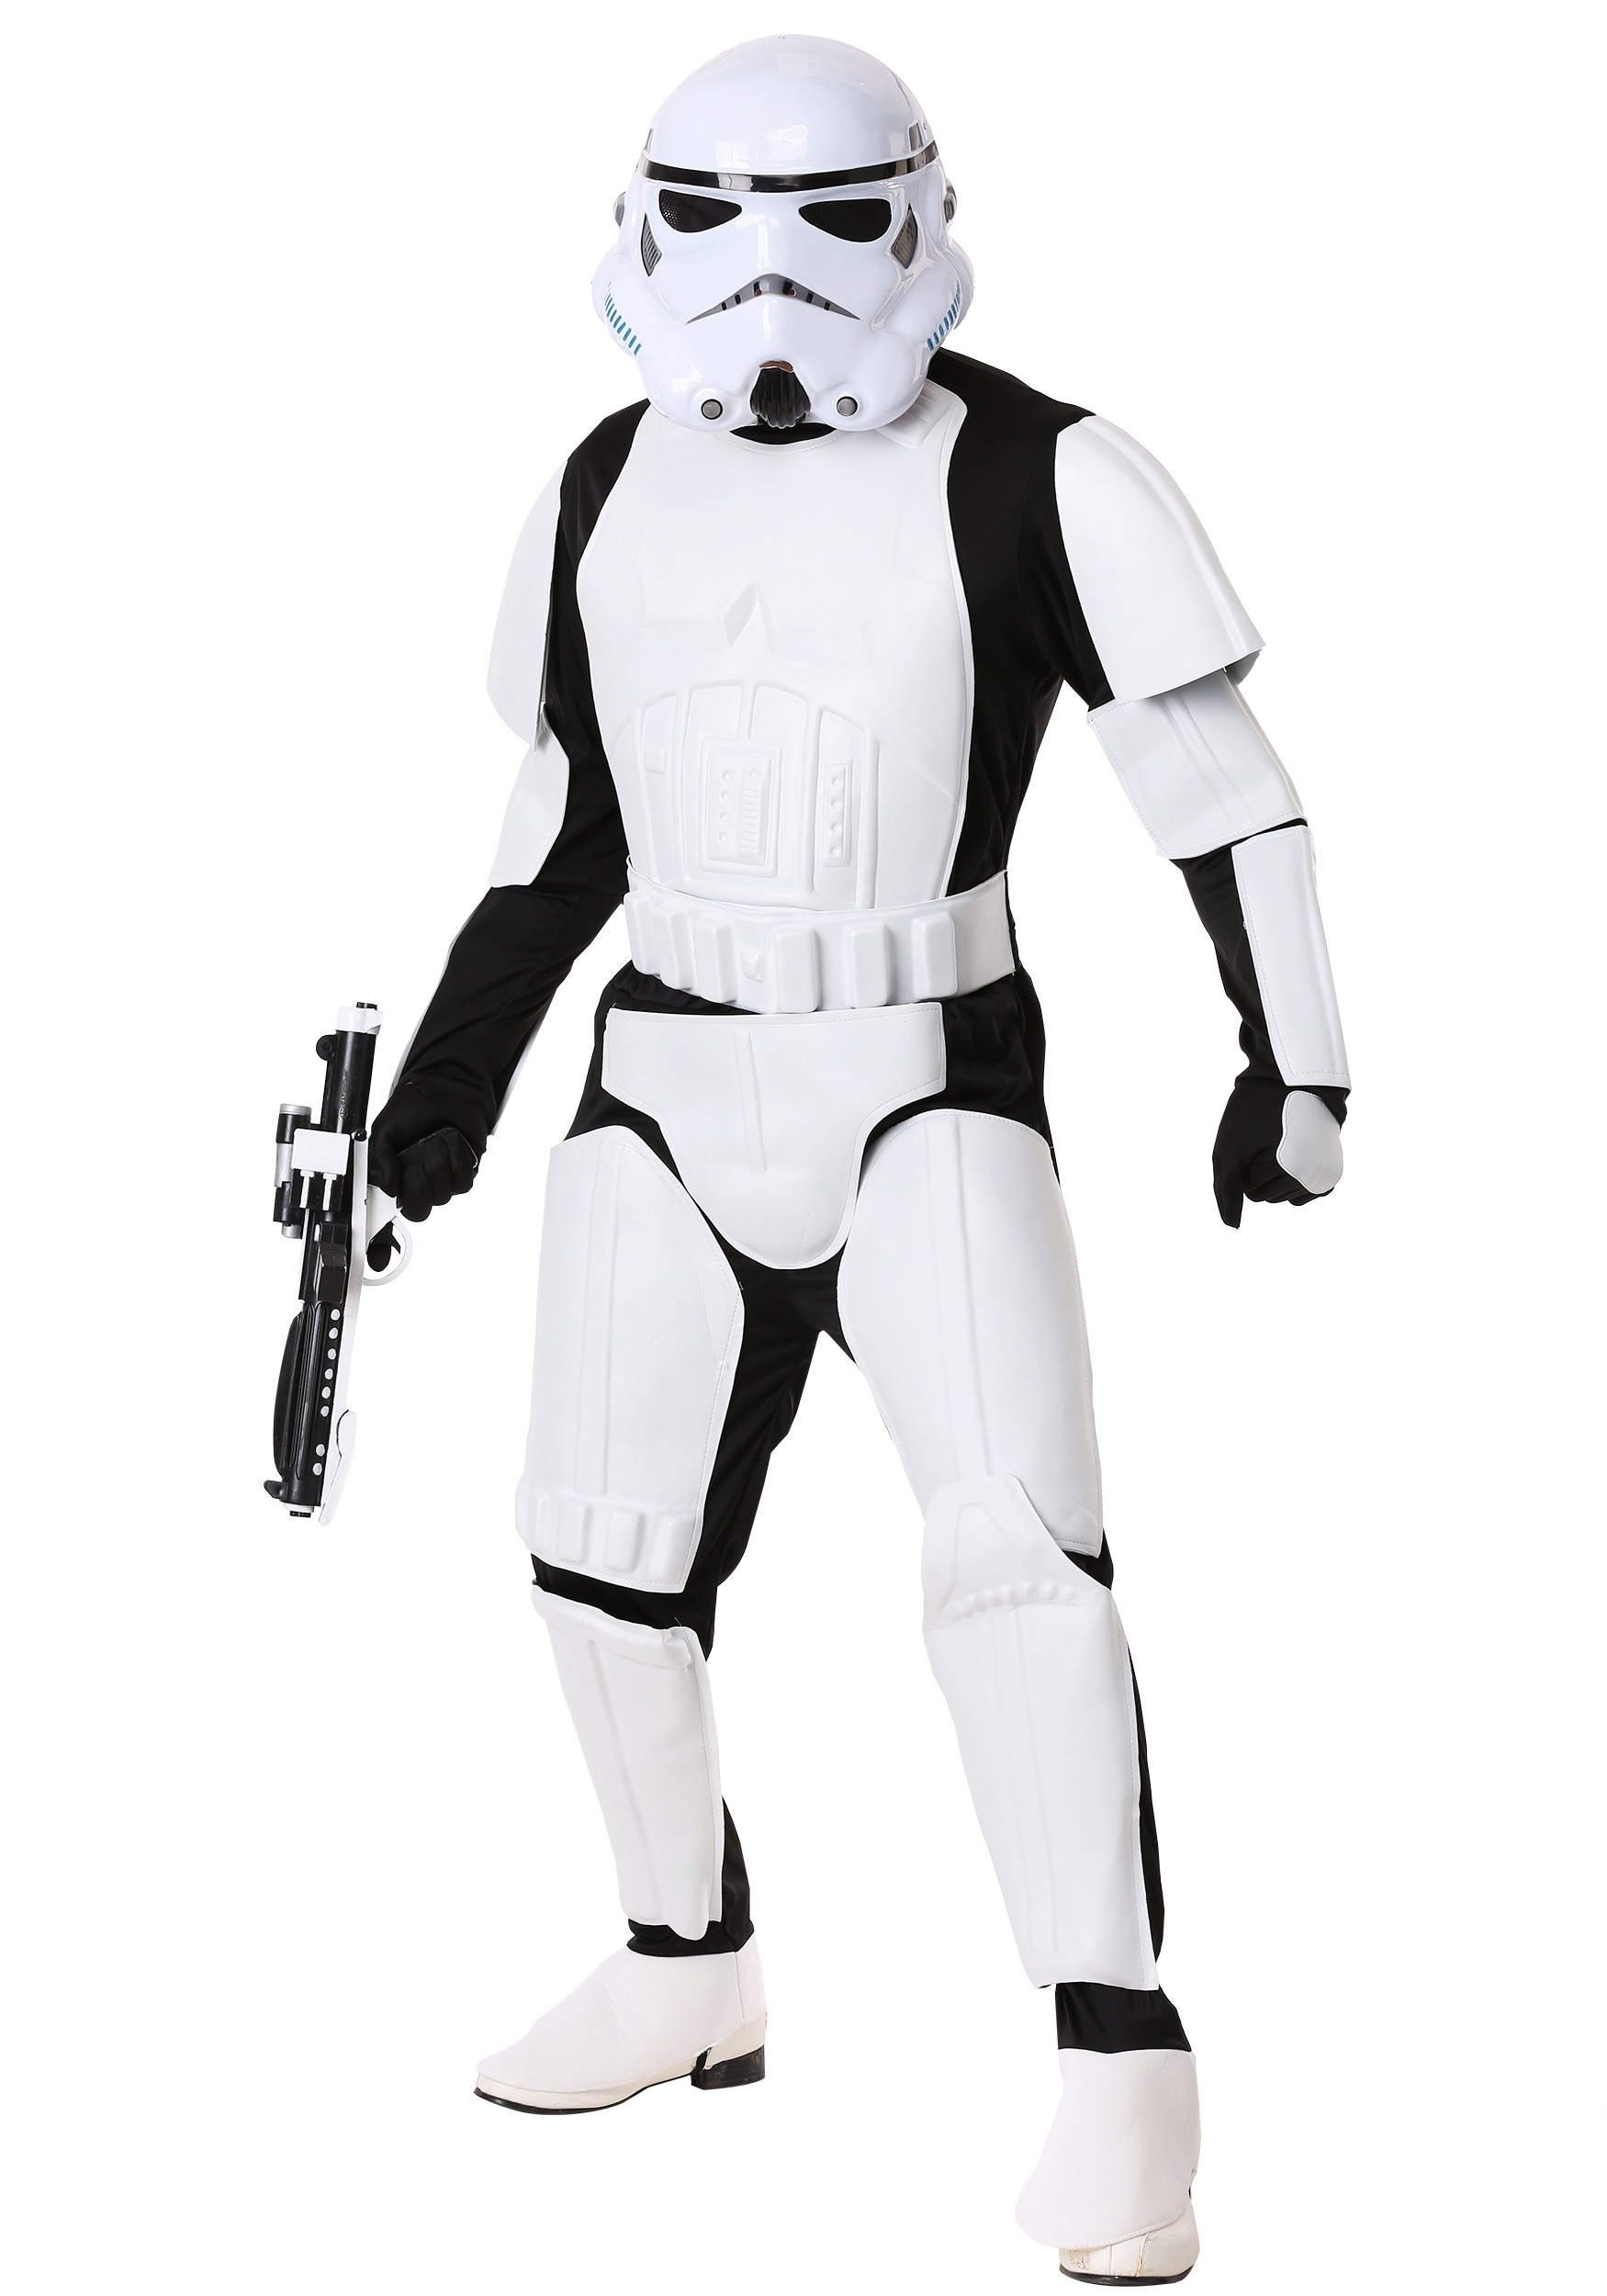 Star Wars Stormtrooper design costume Adult Size L All Sizes New Original Series 